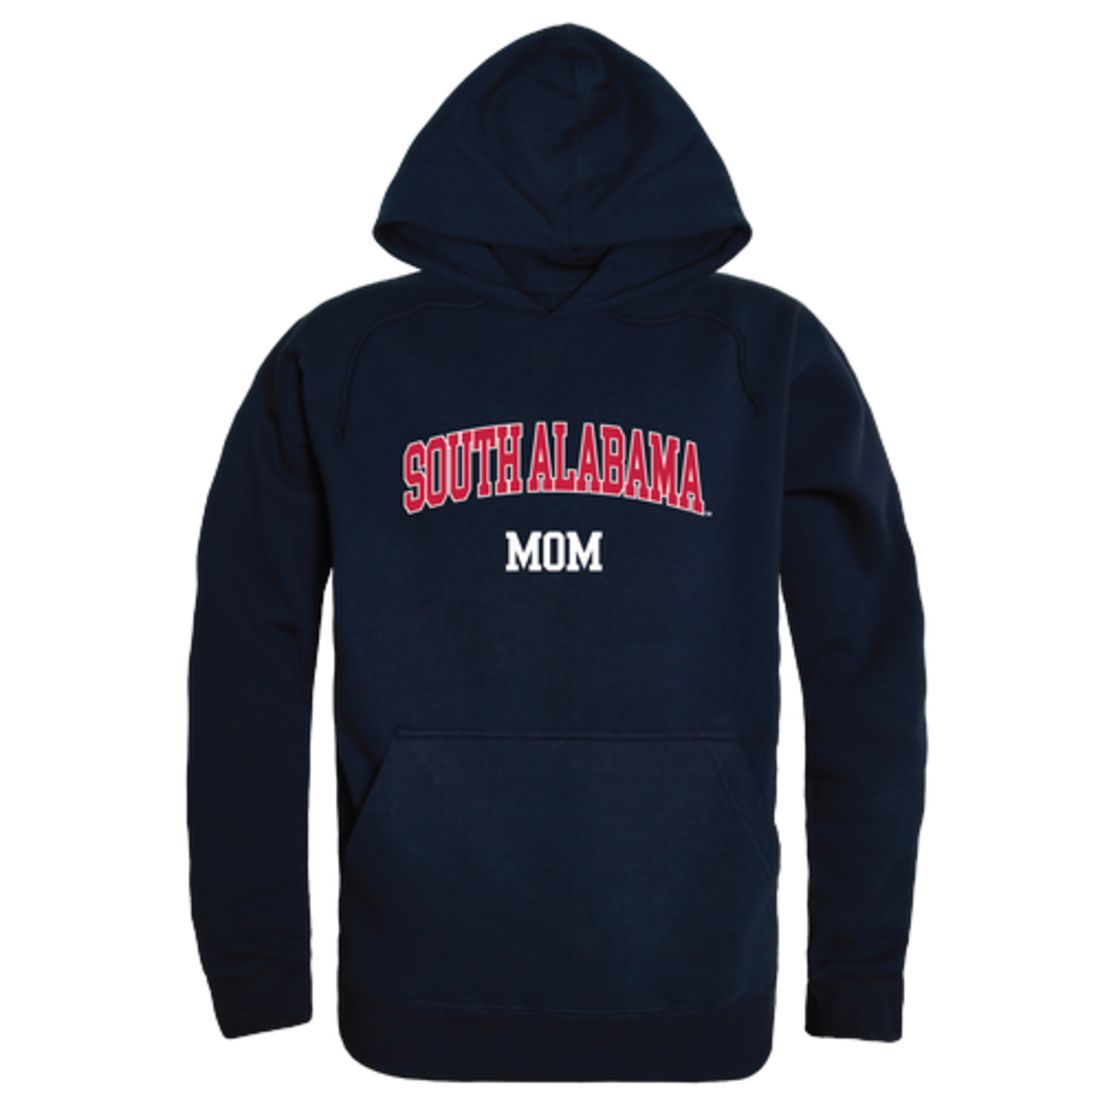 University of South Alabama Jaguars Mom Fleece Hoodie Sweatshirts Heather Grey-Campus-Wardrobe